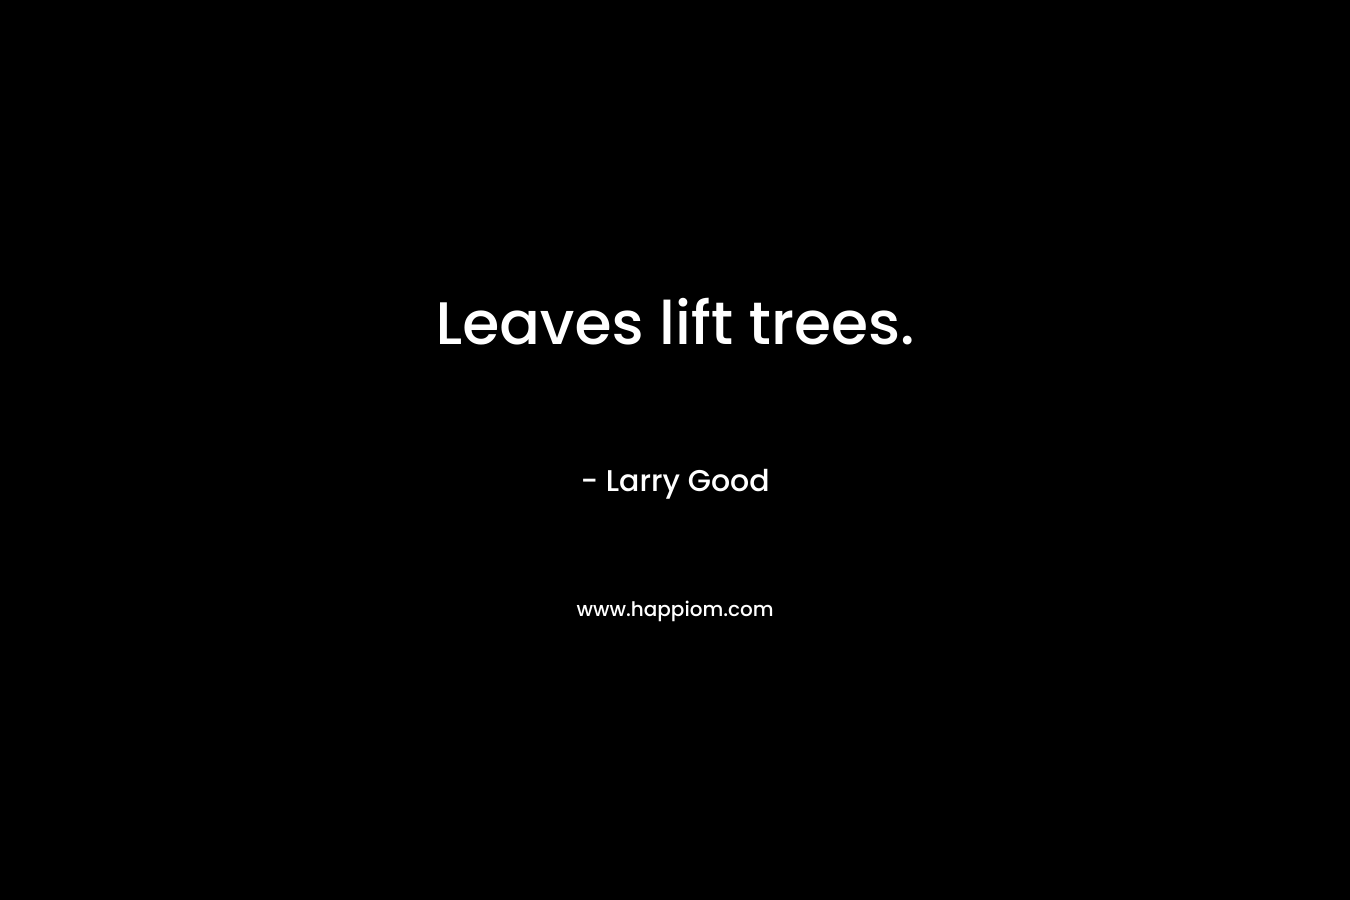 Leaves lift trees.